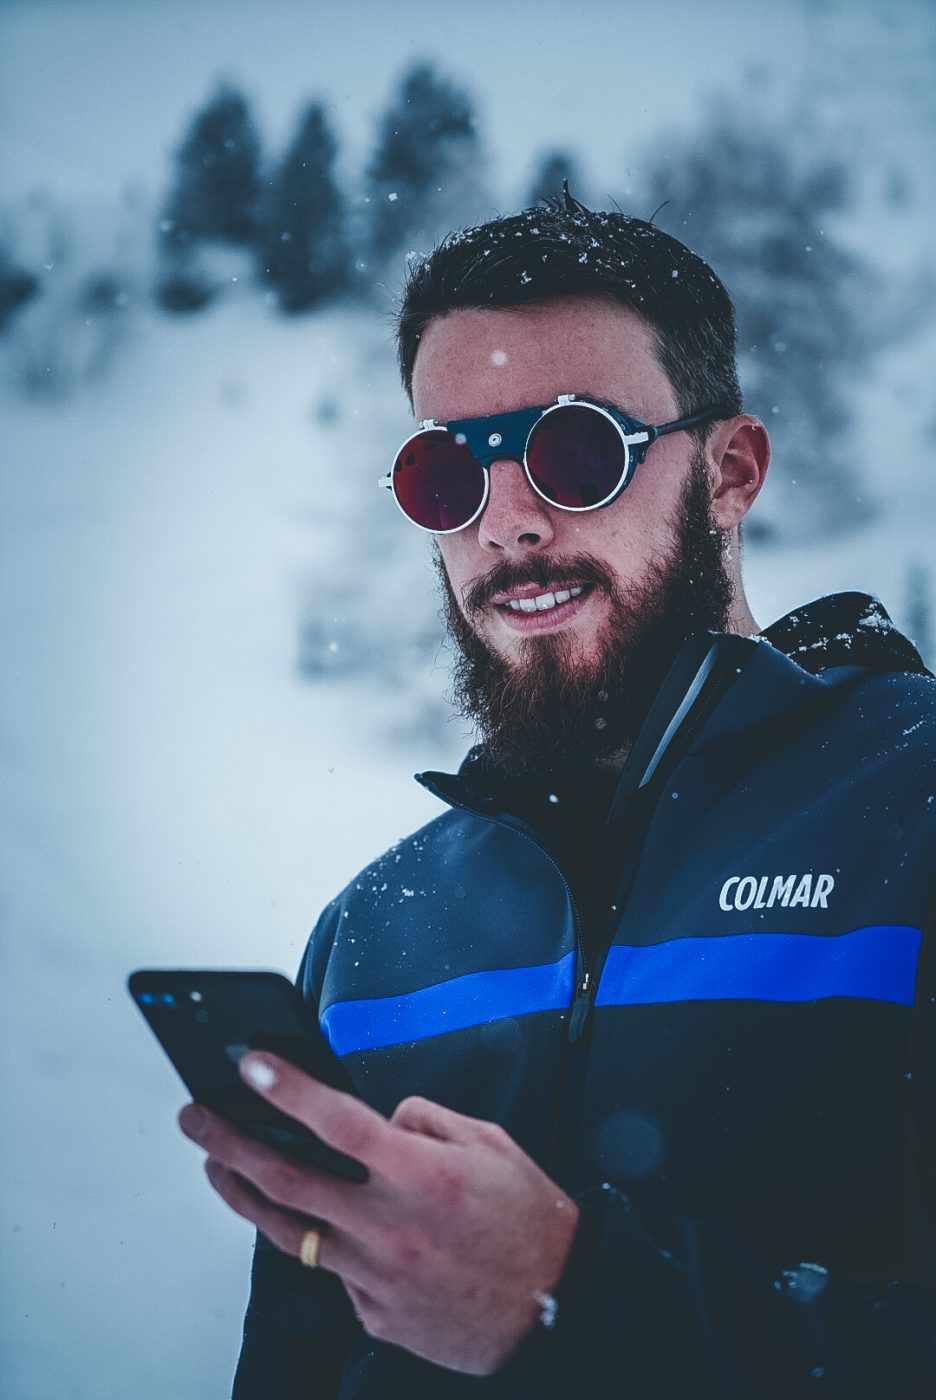 Colmar, Colmarsports ski attire for men